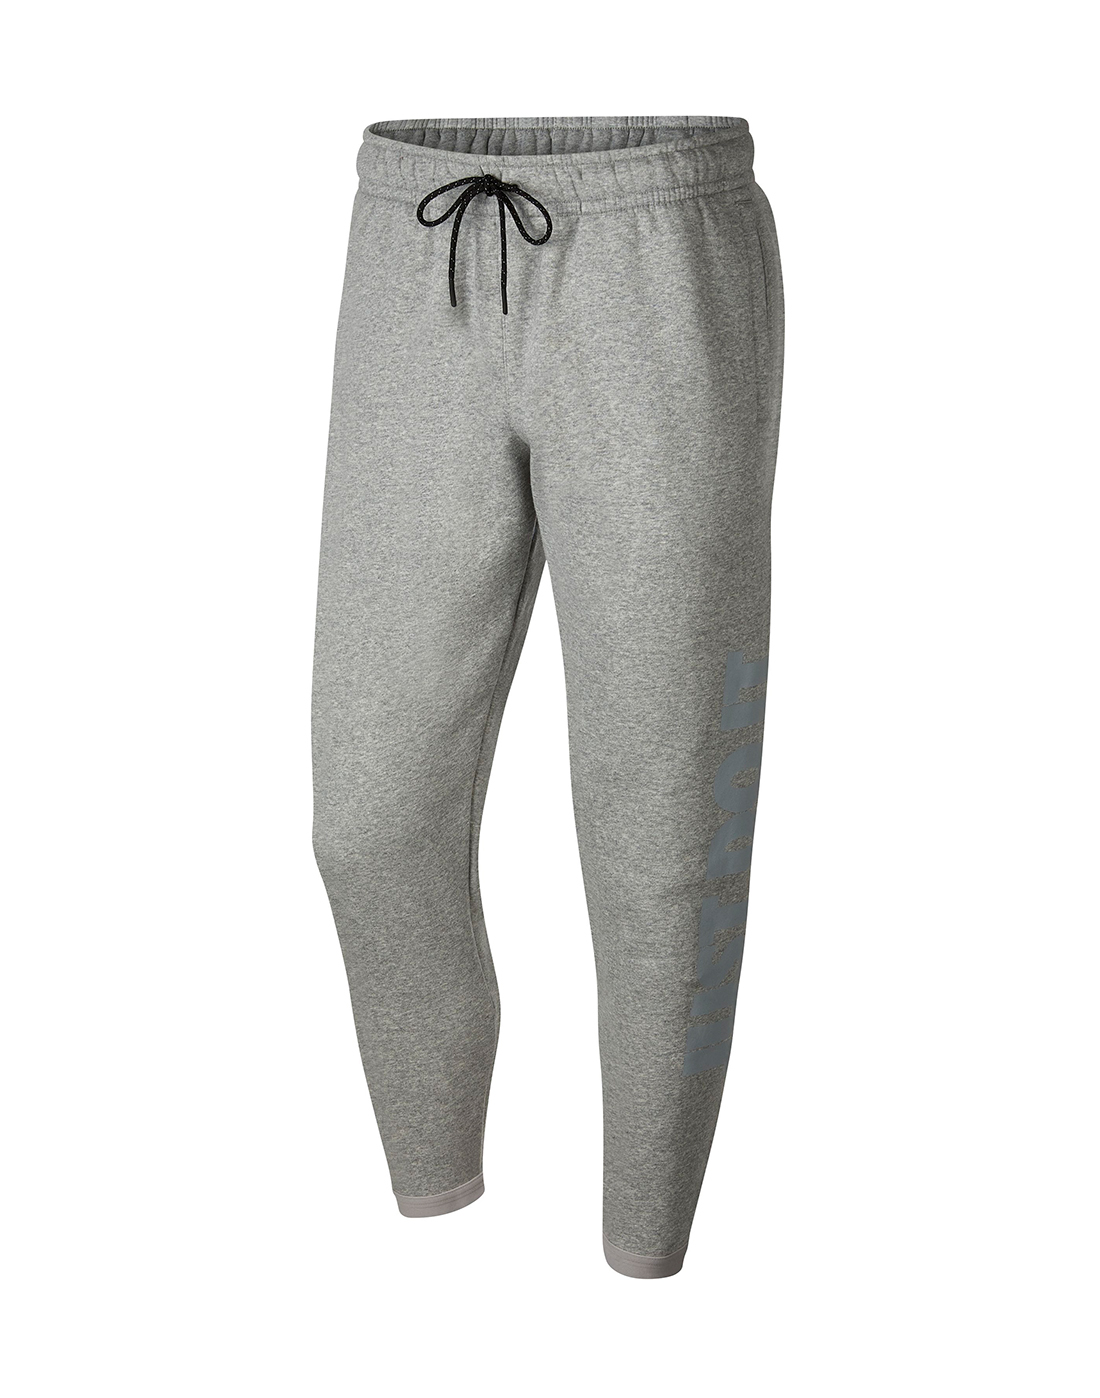 Nike Mens JDI Fleece Pants - Grey 